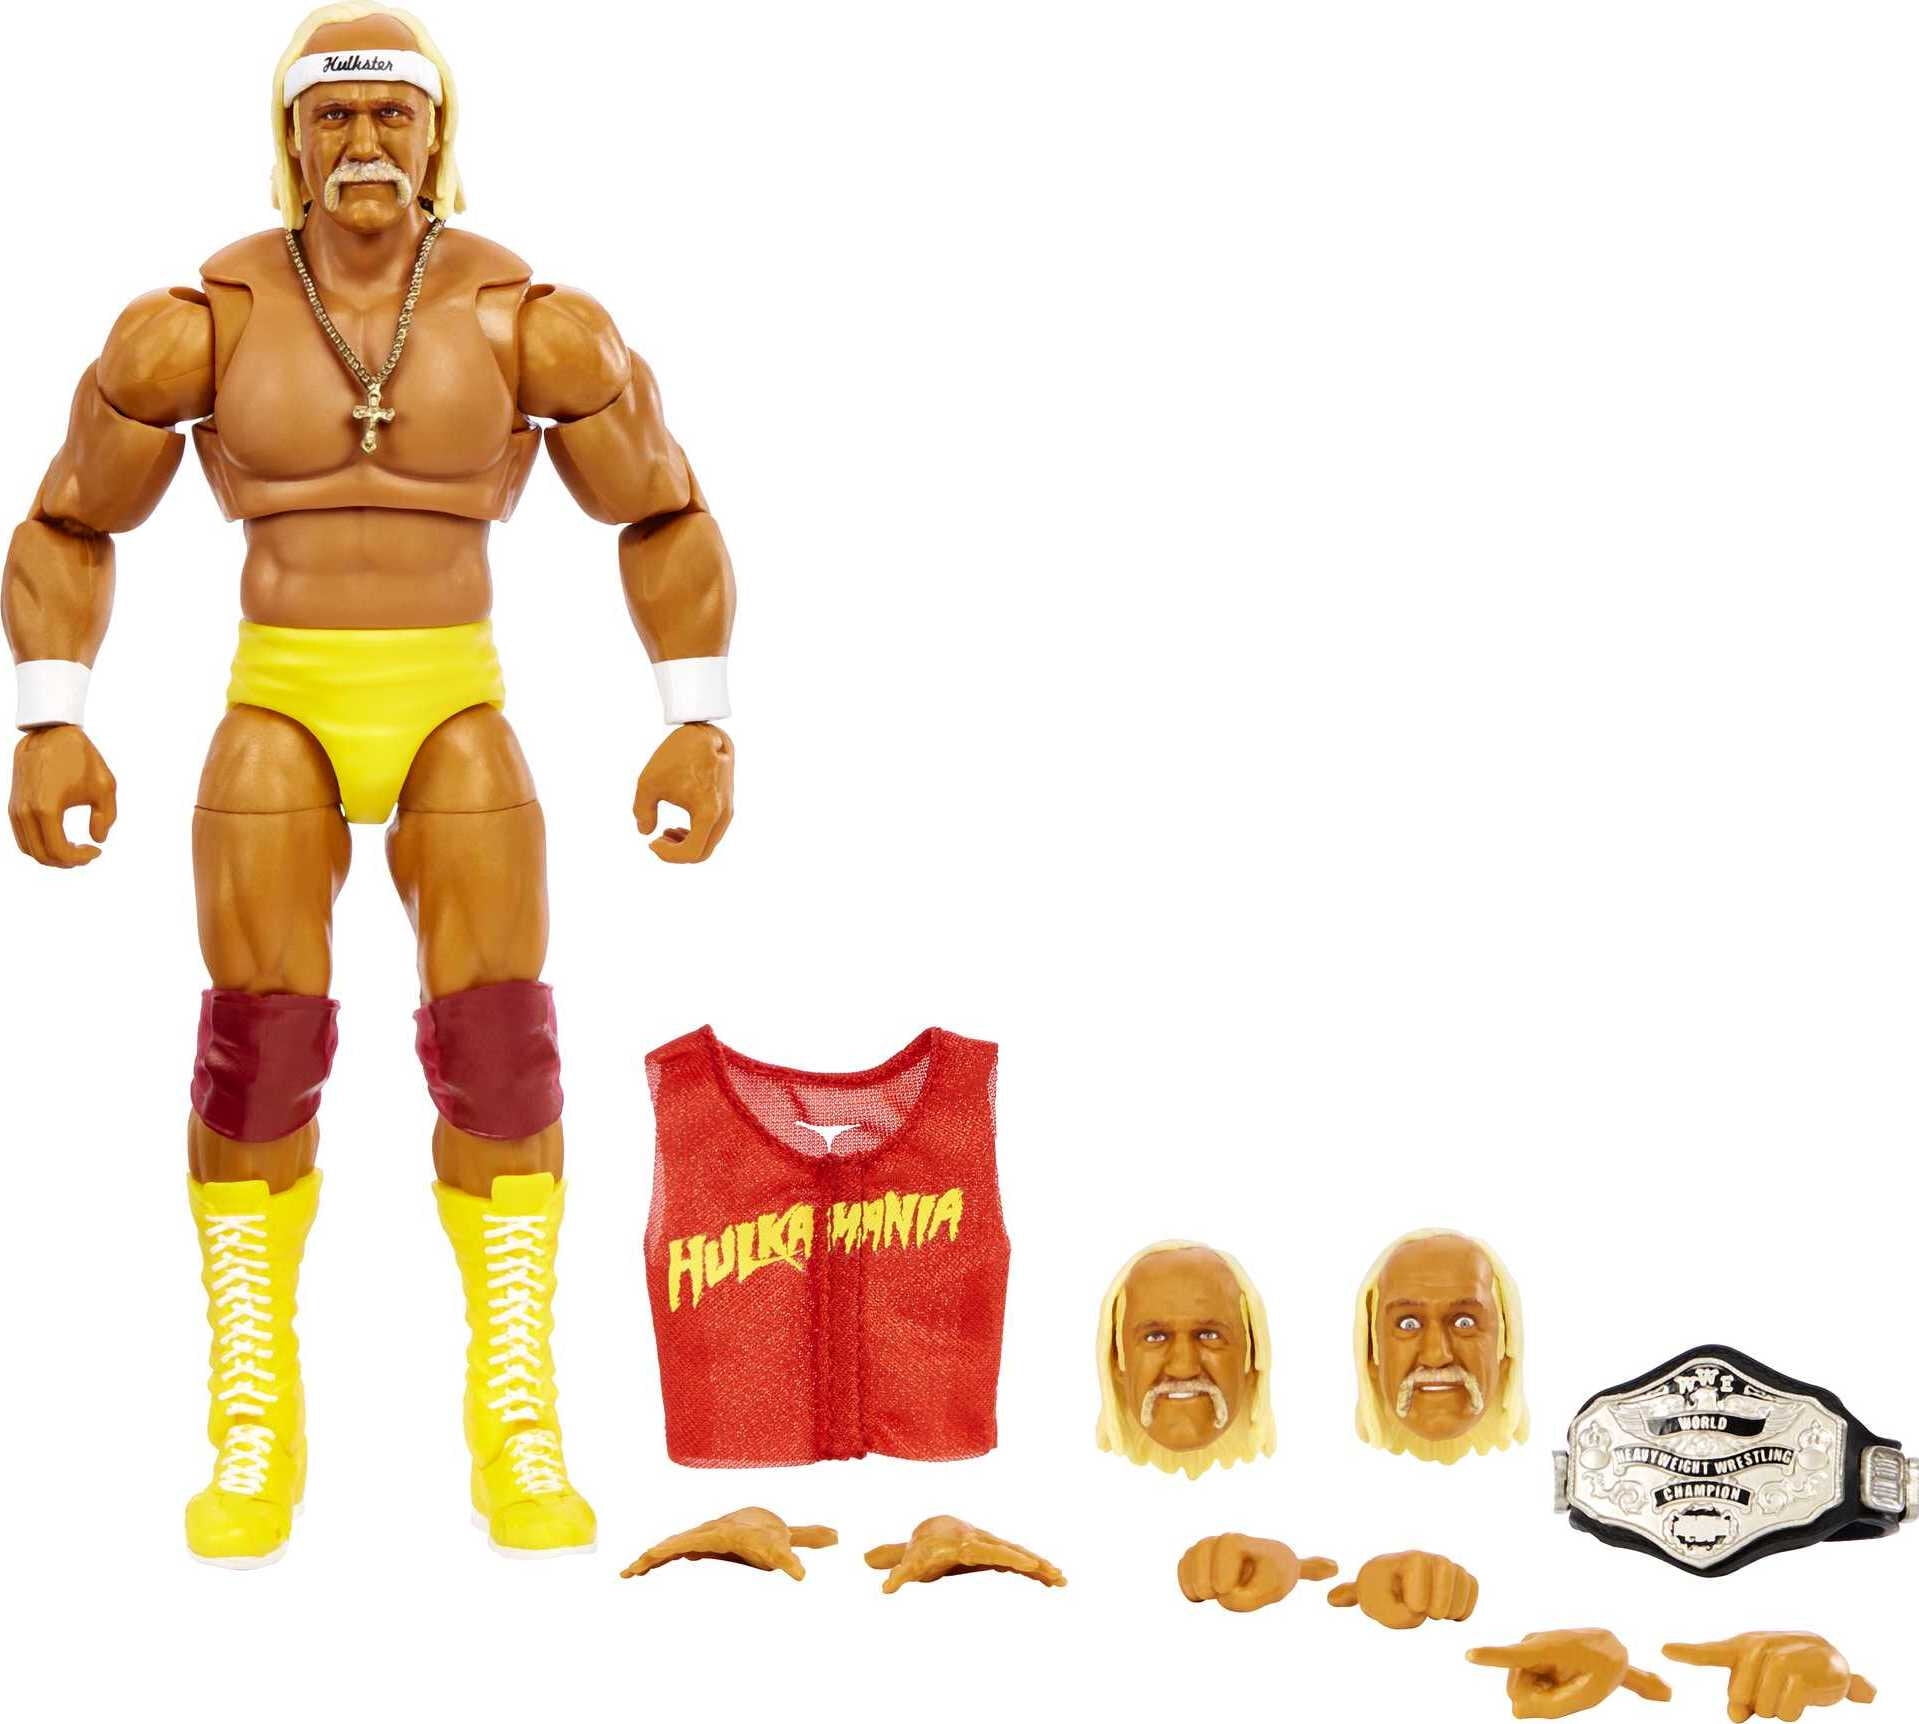 Hulk Hogan Signed 16x20 Photo WWE WCW WWF Pose BAS Beckett Witnessed | eBay